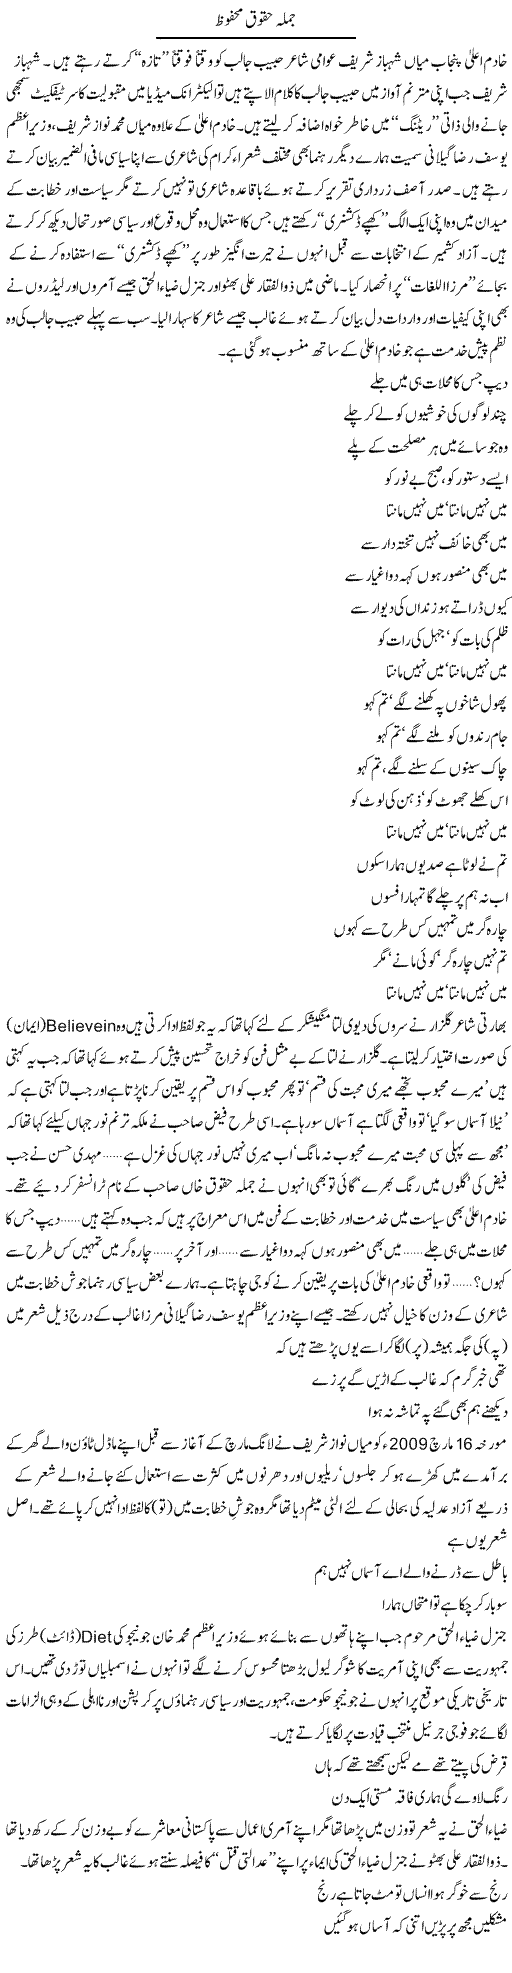 Shahbaz Sharif Express Column Tahir Sarwar 14 August 2011